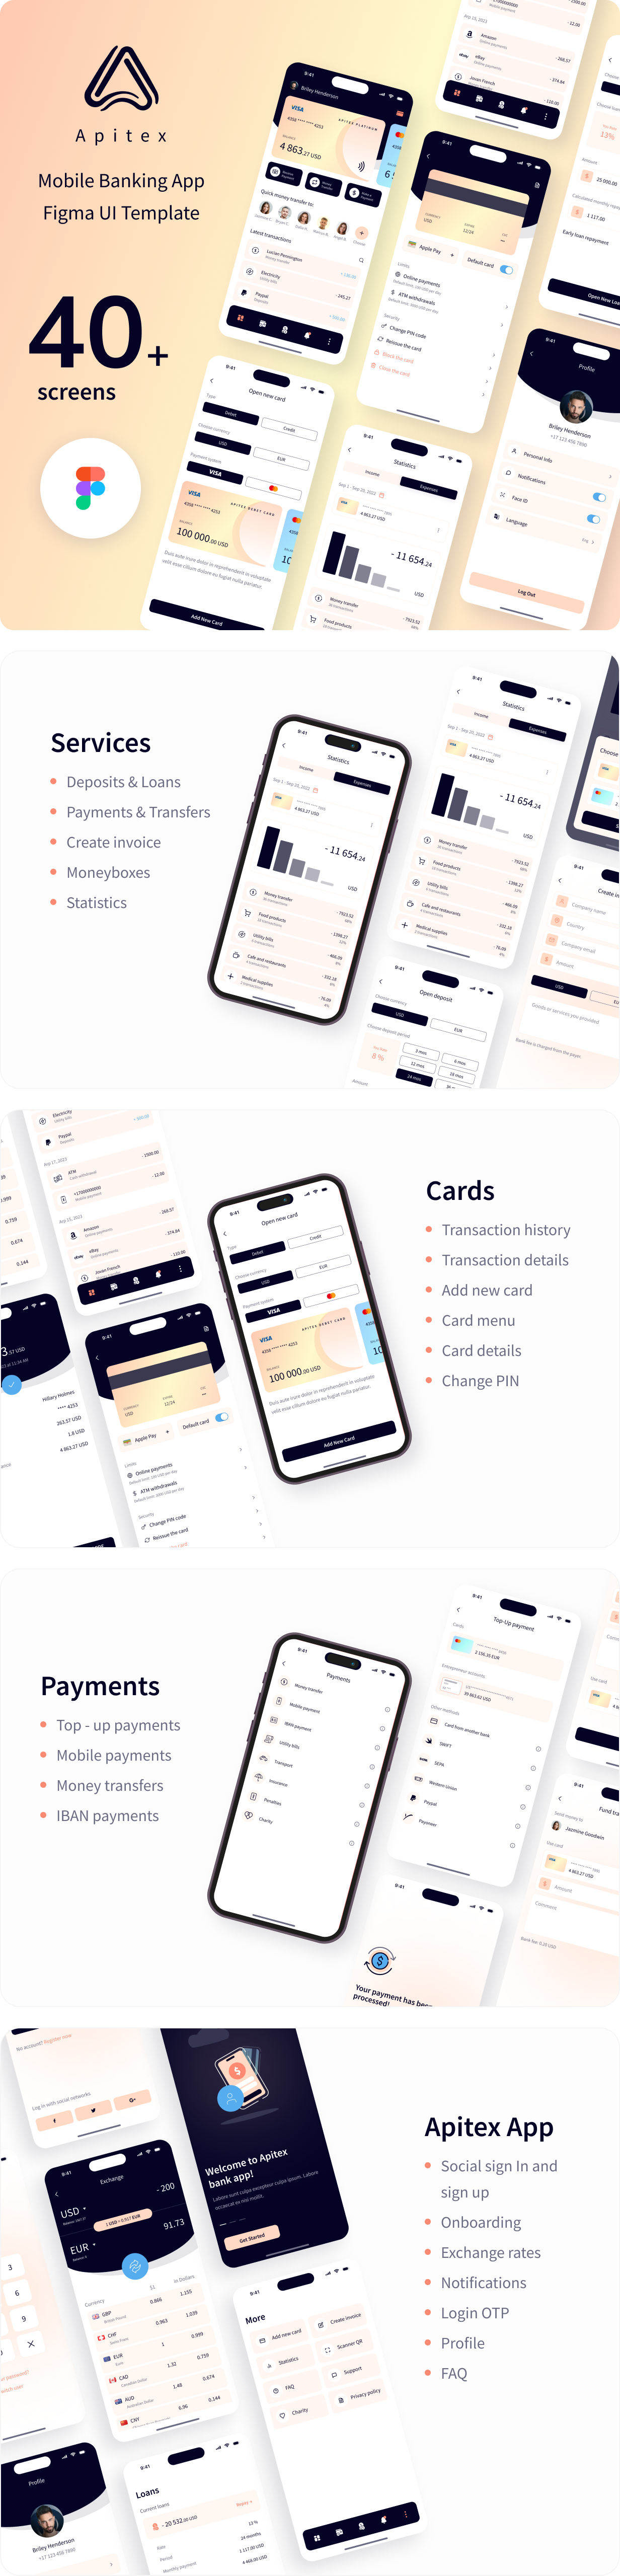 Apitex - Mobile Banking App Figma UI Template - 1